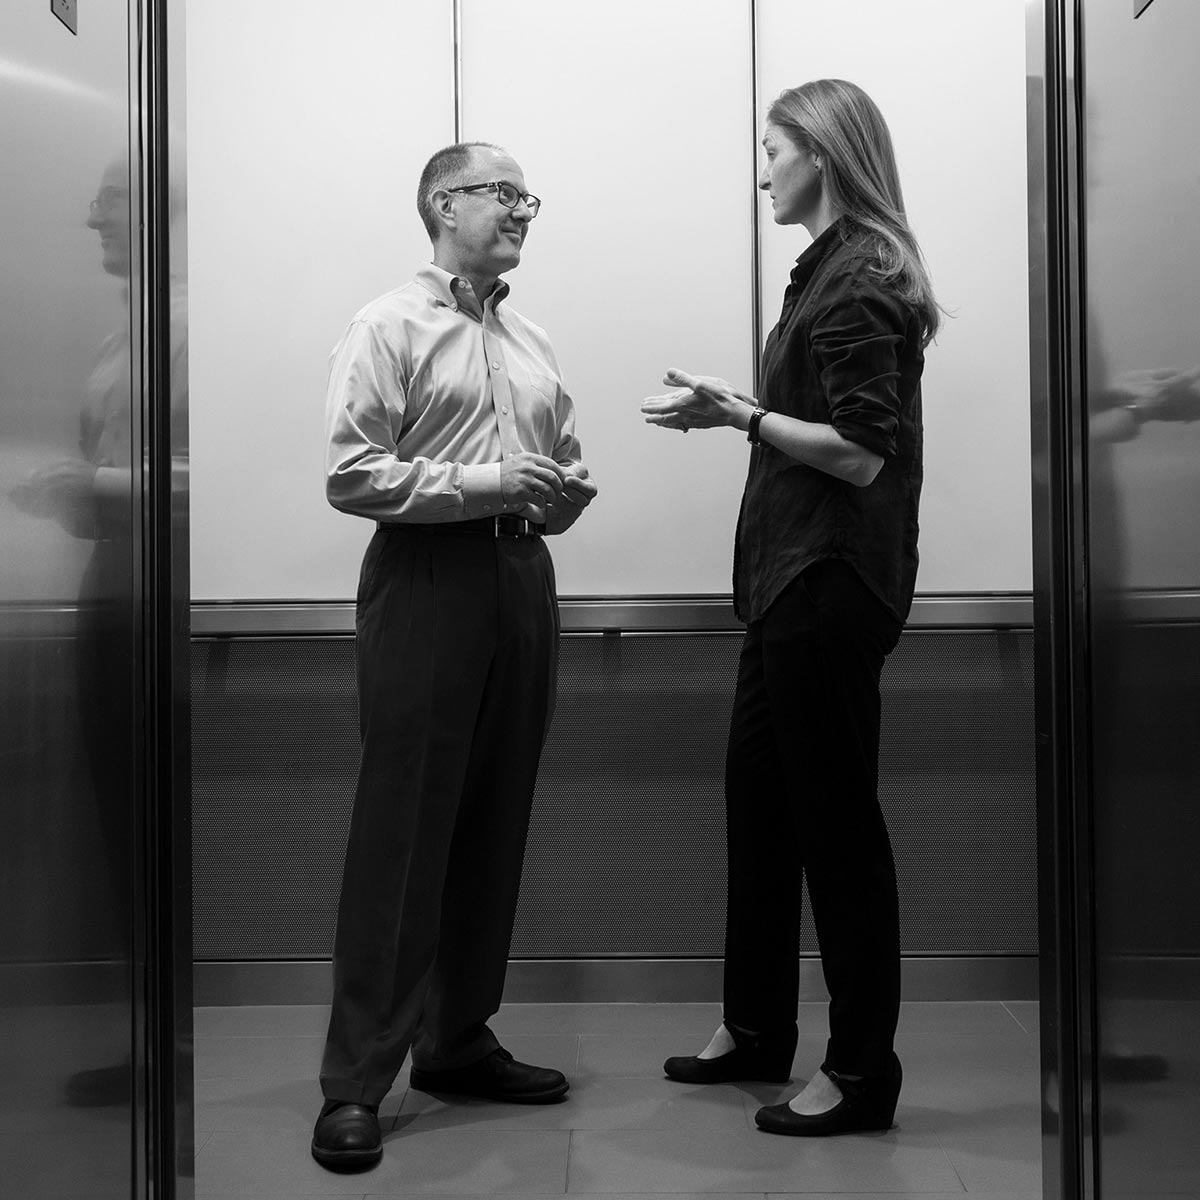 Pinney Associates Senior Leaders Joe Gitchell and Lucy Owen speaking in an elevator.